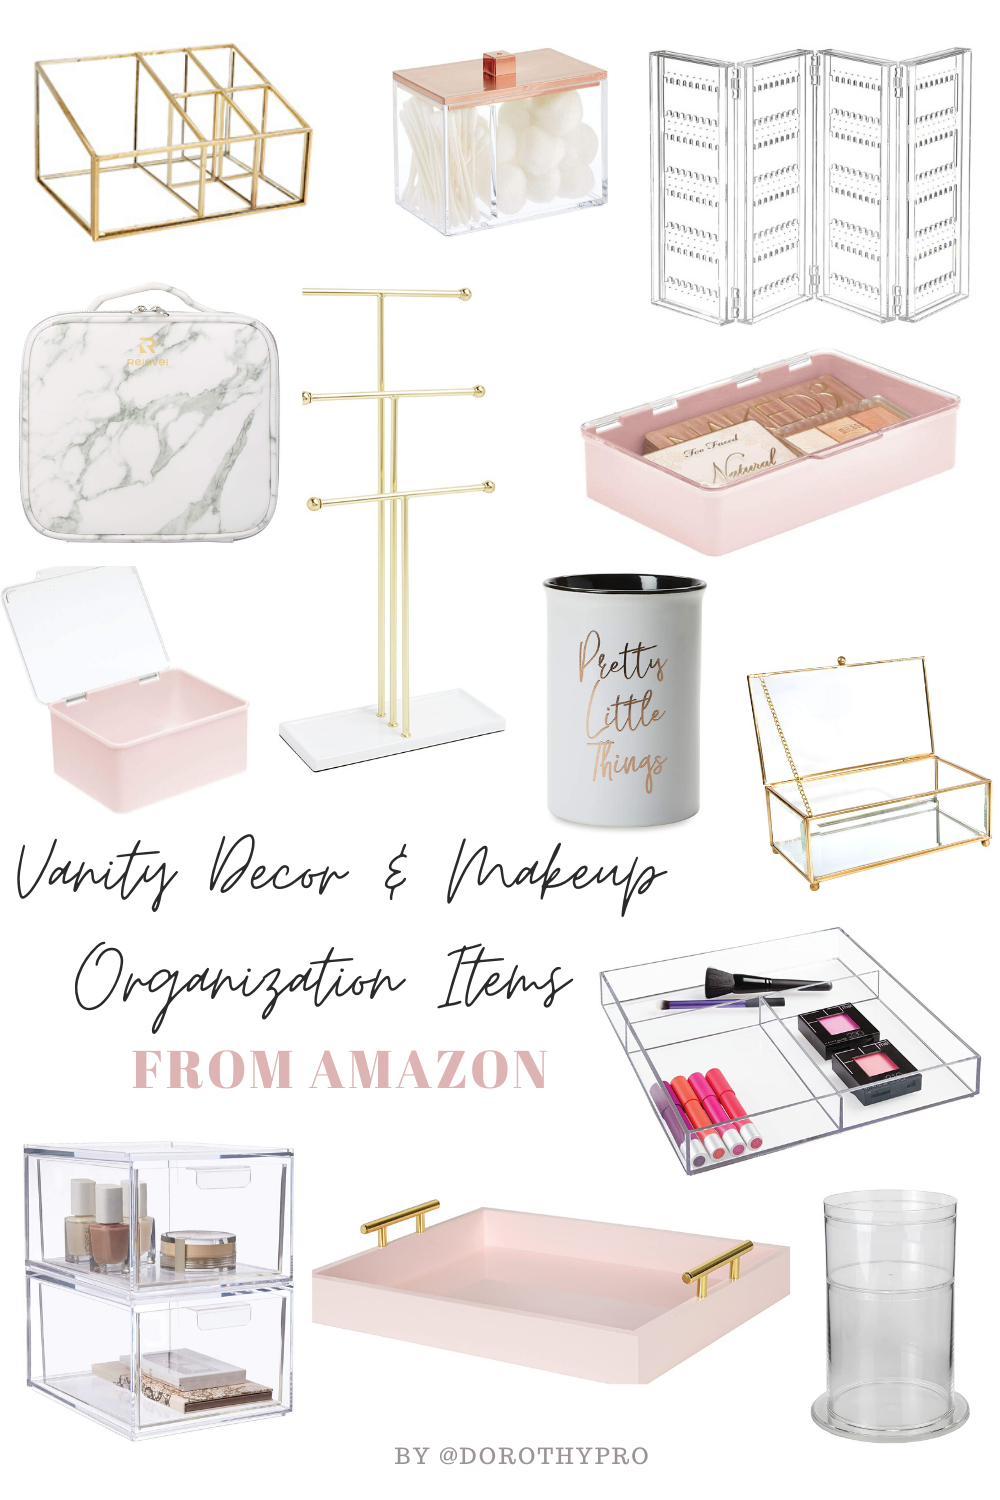 18 beauty Room organization ideas